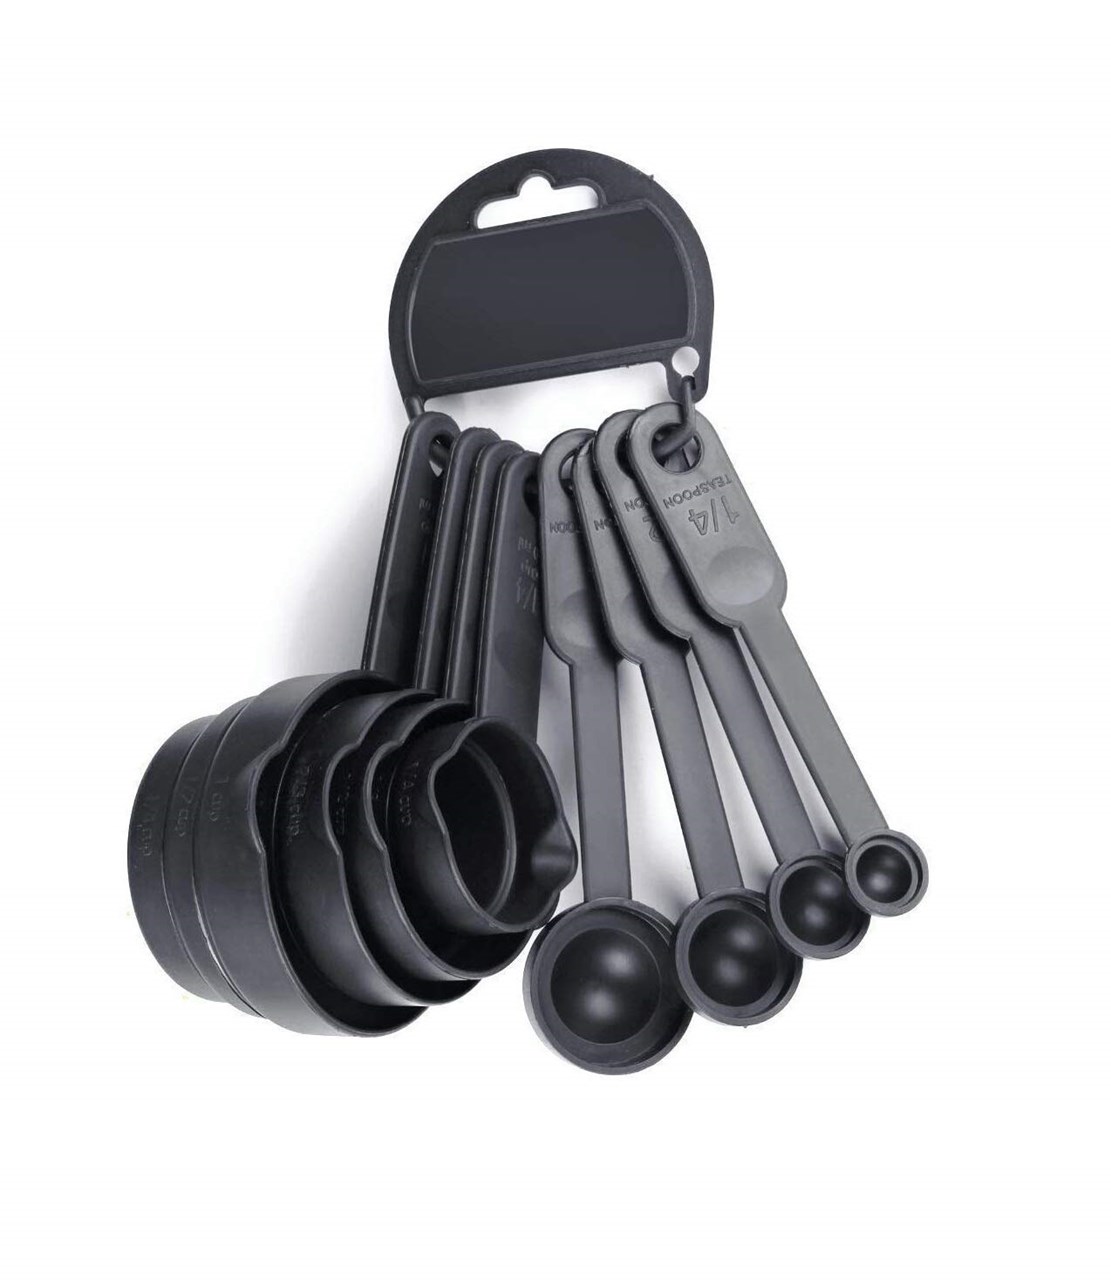 Picture of VE Smart Plastic Measuring Cup & Spoon Set, 8 Pieces, Black Colour, Baking Accessories, Kitchen Tools